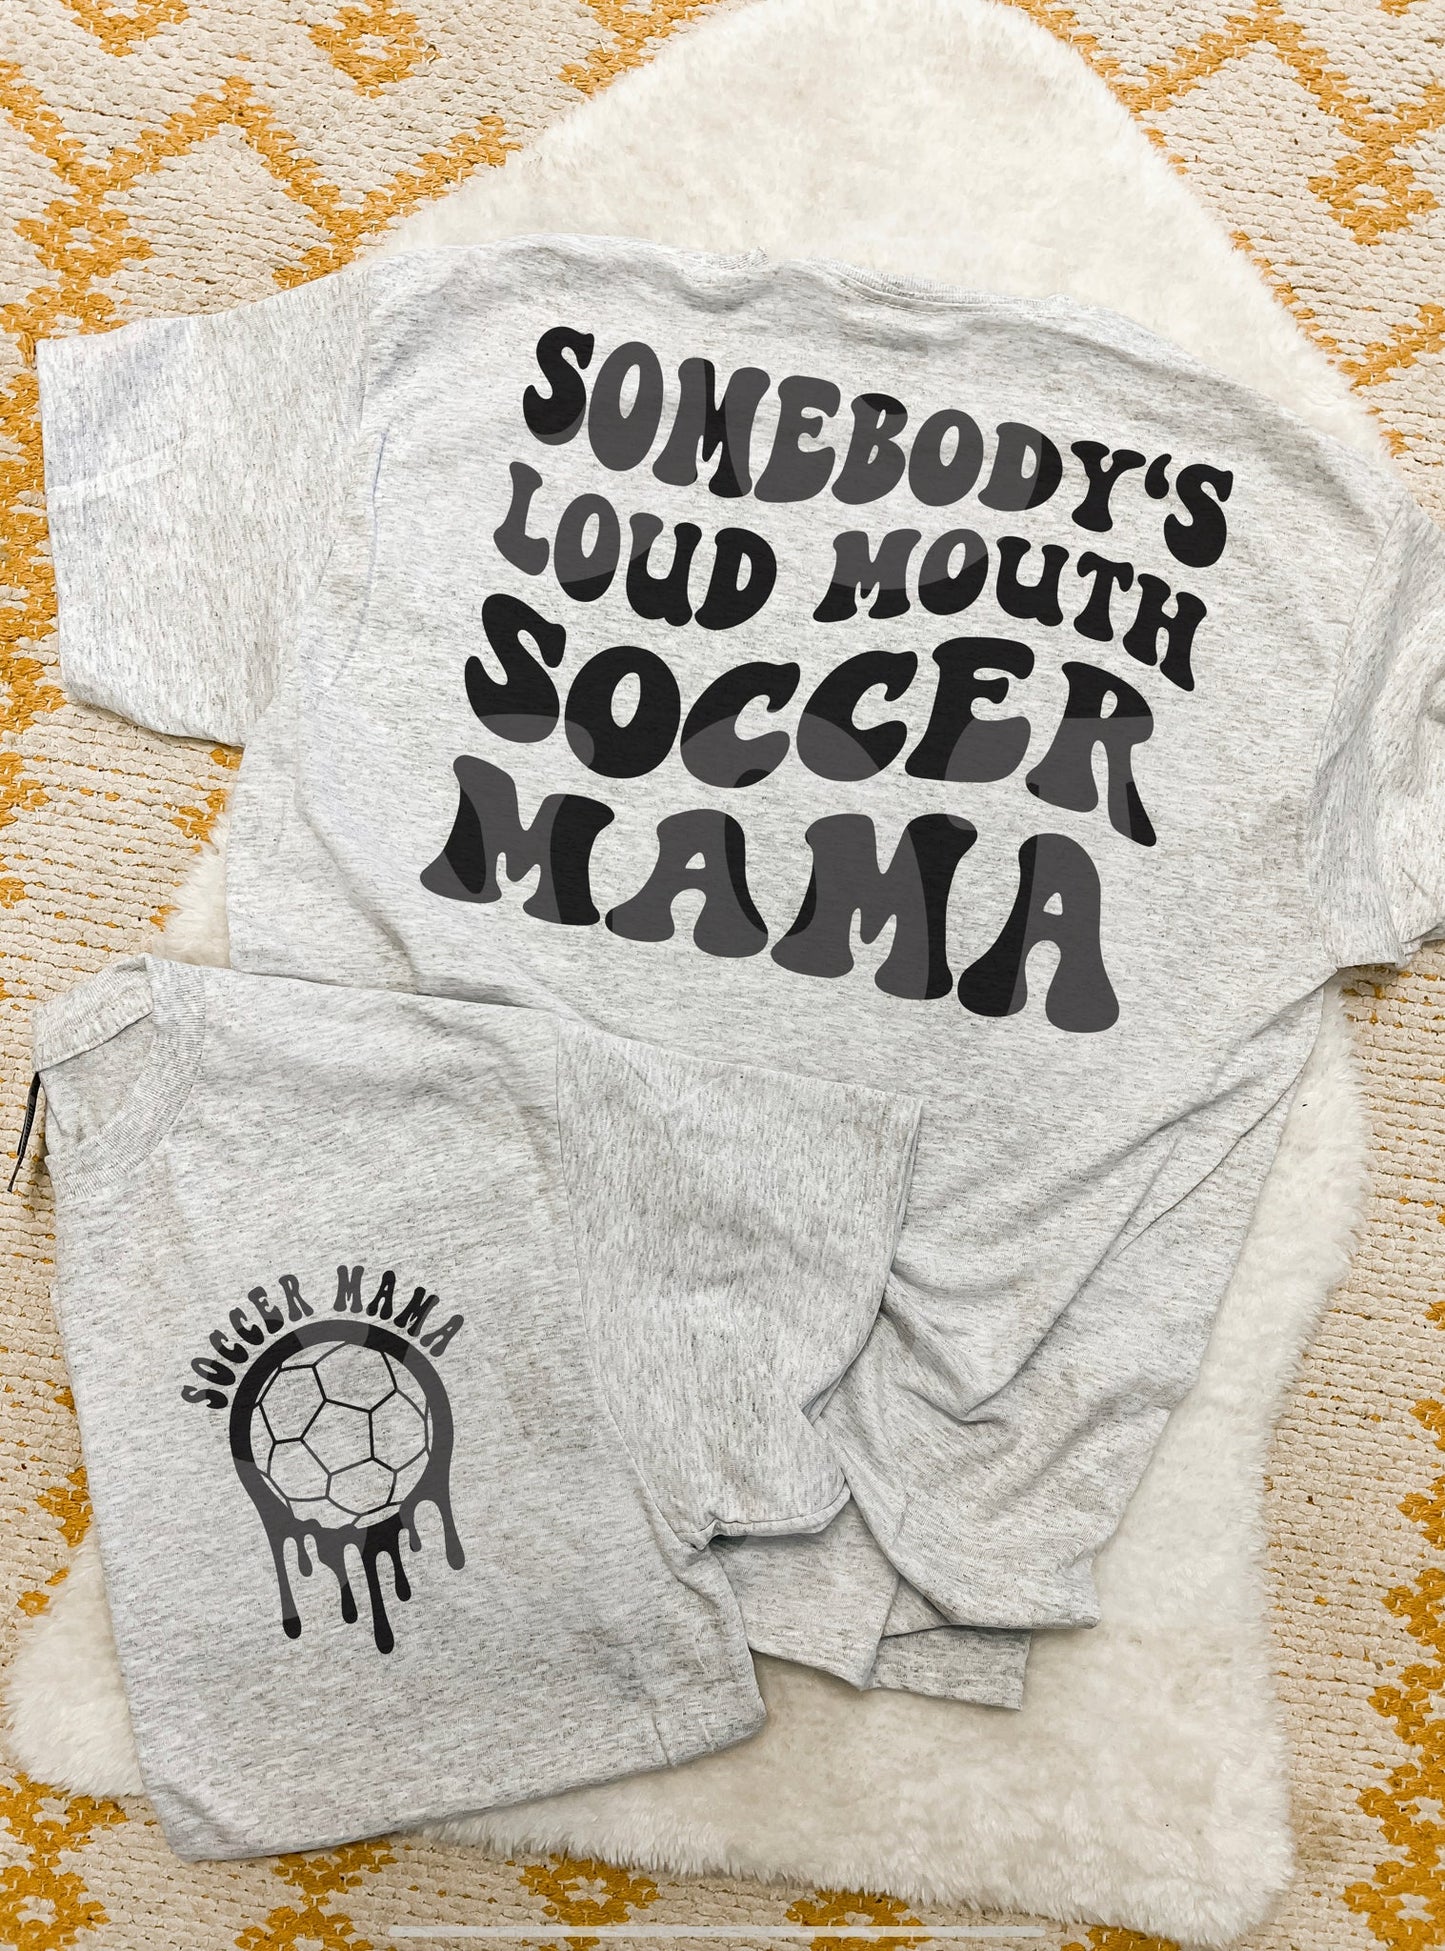 Loud Mouth Soccer Mama ~ Sweatshirt•Tee